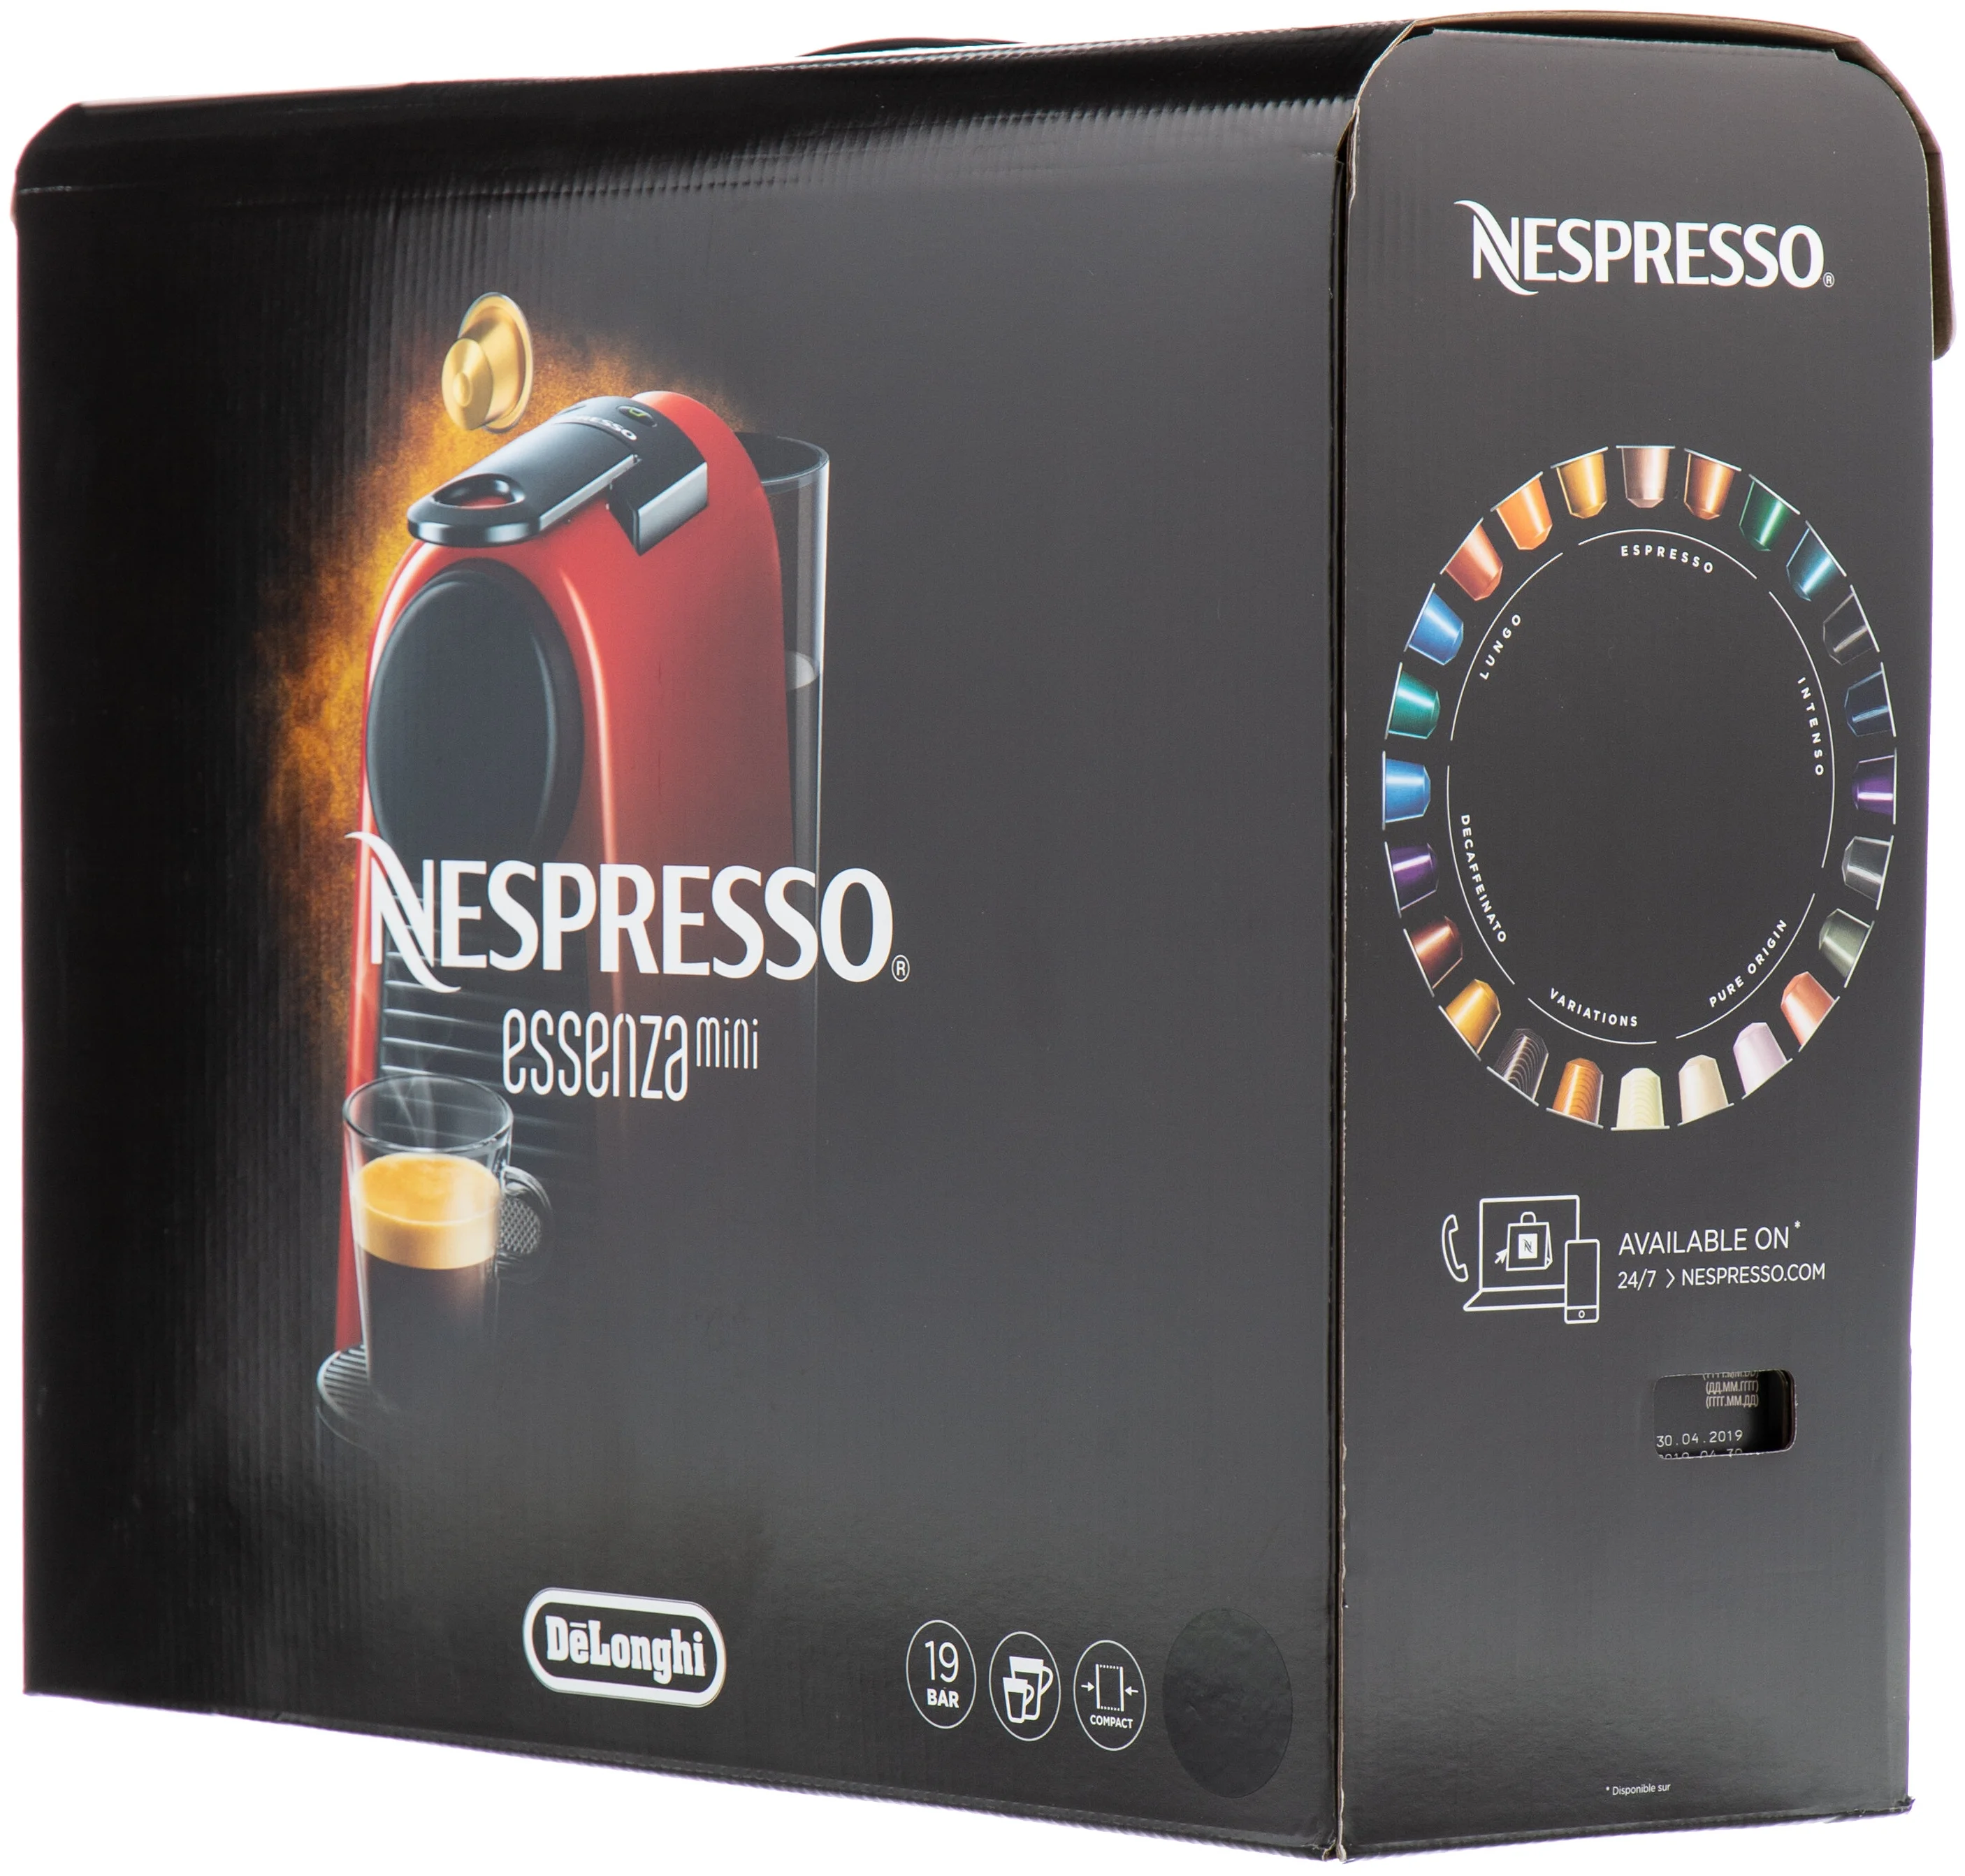 De'Longhi Nespresso Essenza Mini EN 85 - доп. функции: автоотключение при неиспользовании